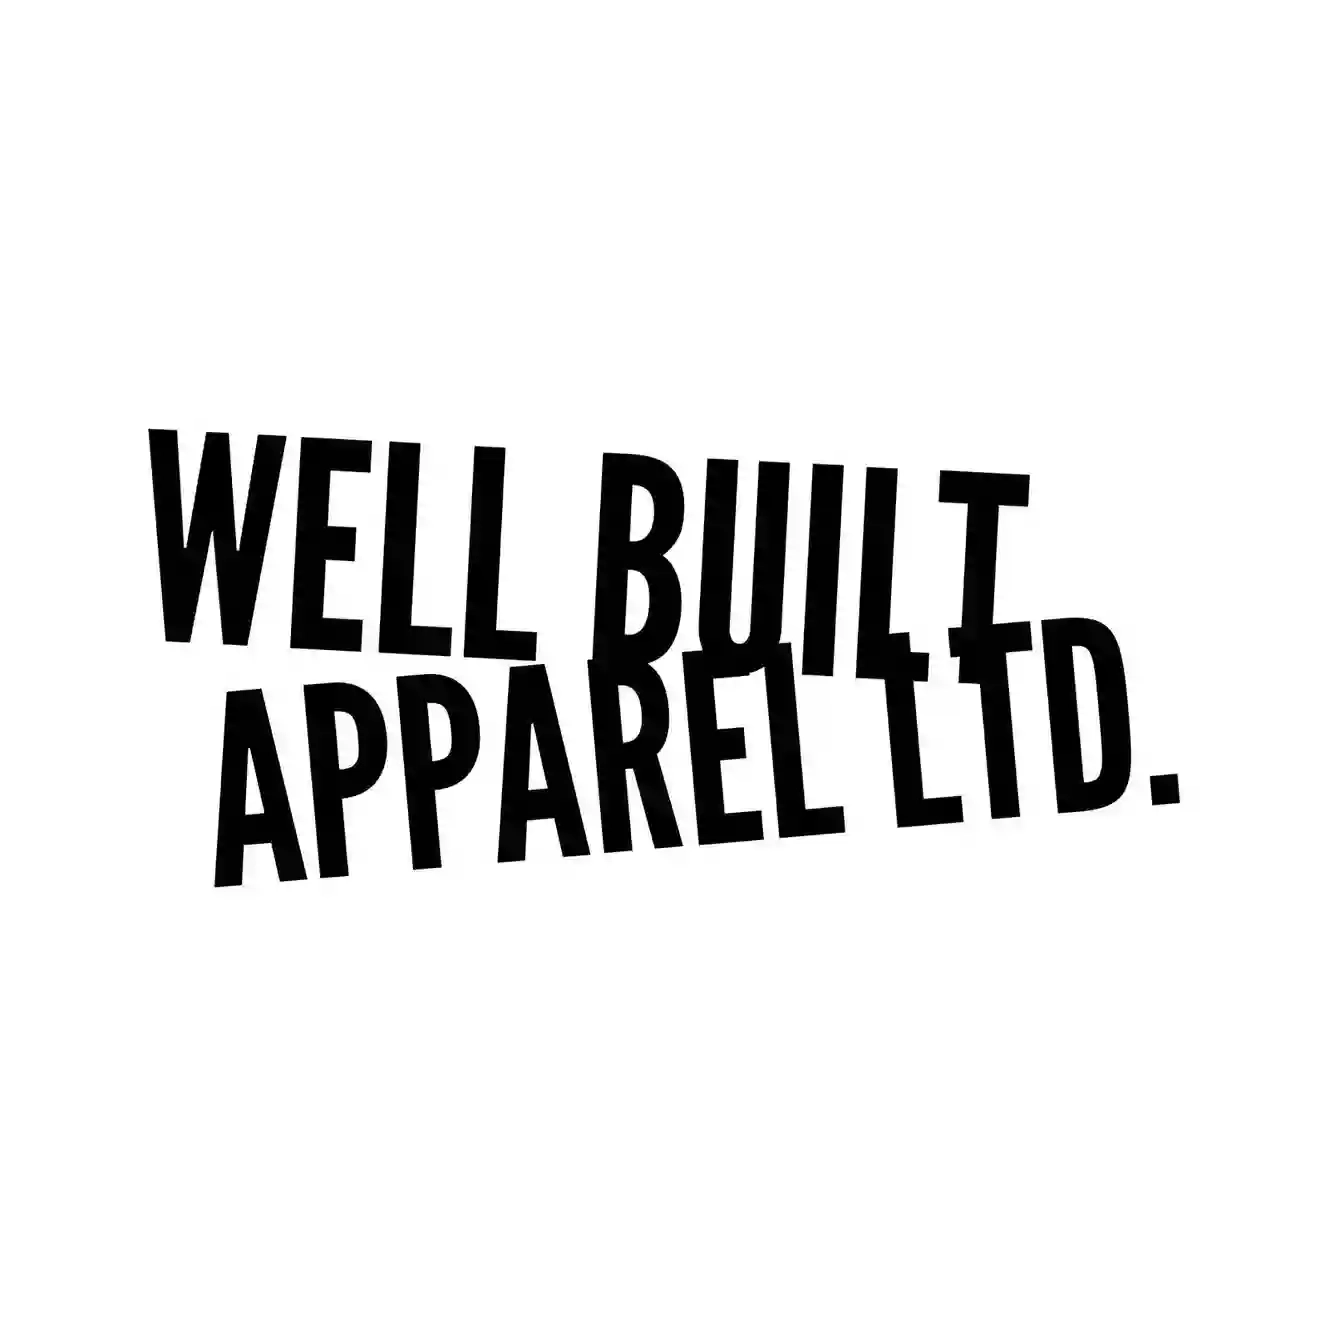 Well Built Apparel Ltd